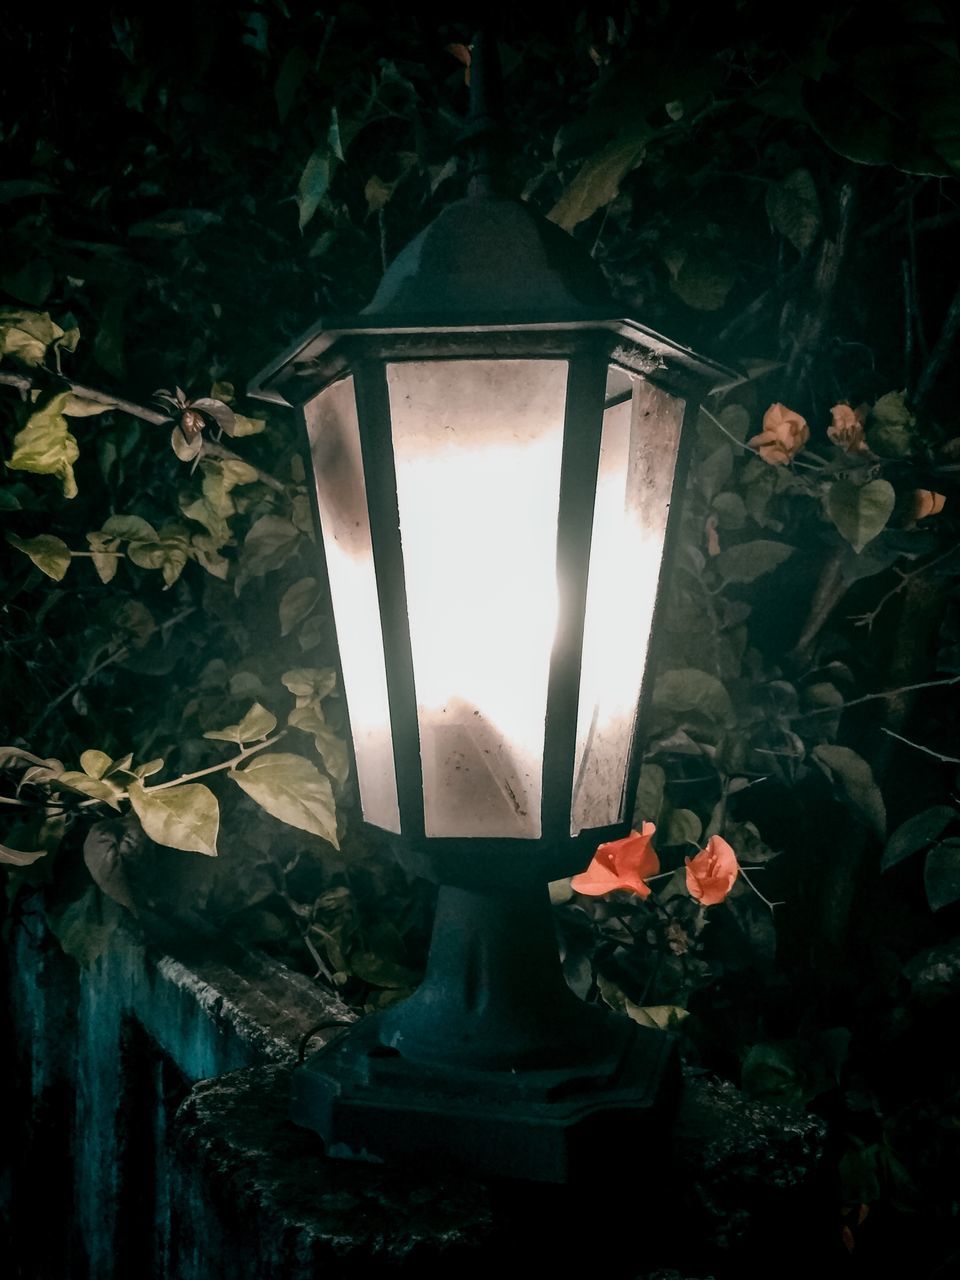 CLOSE-UP OF ILLUMINATED LAMP ON PLANT